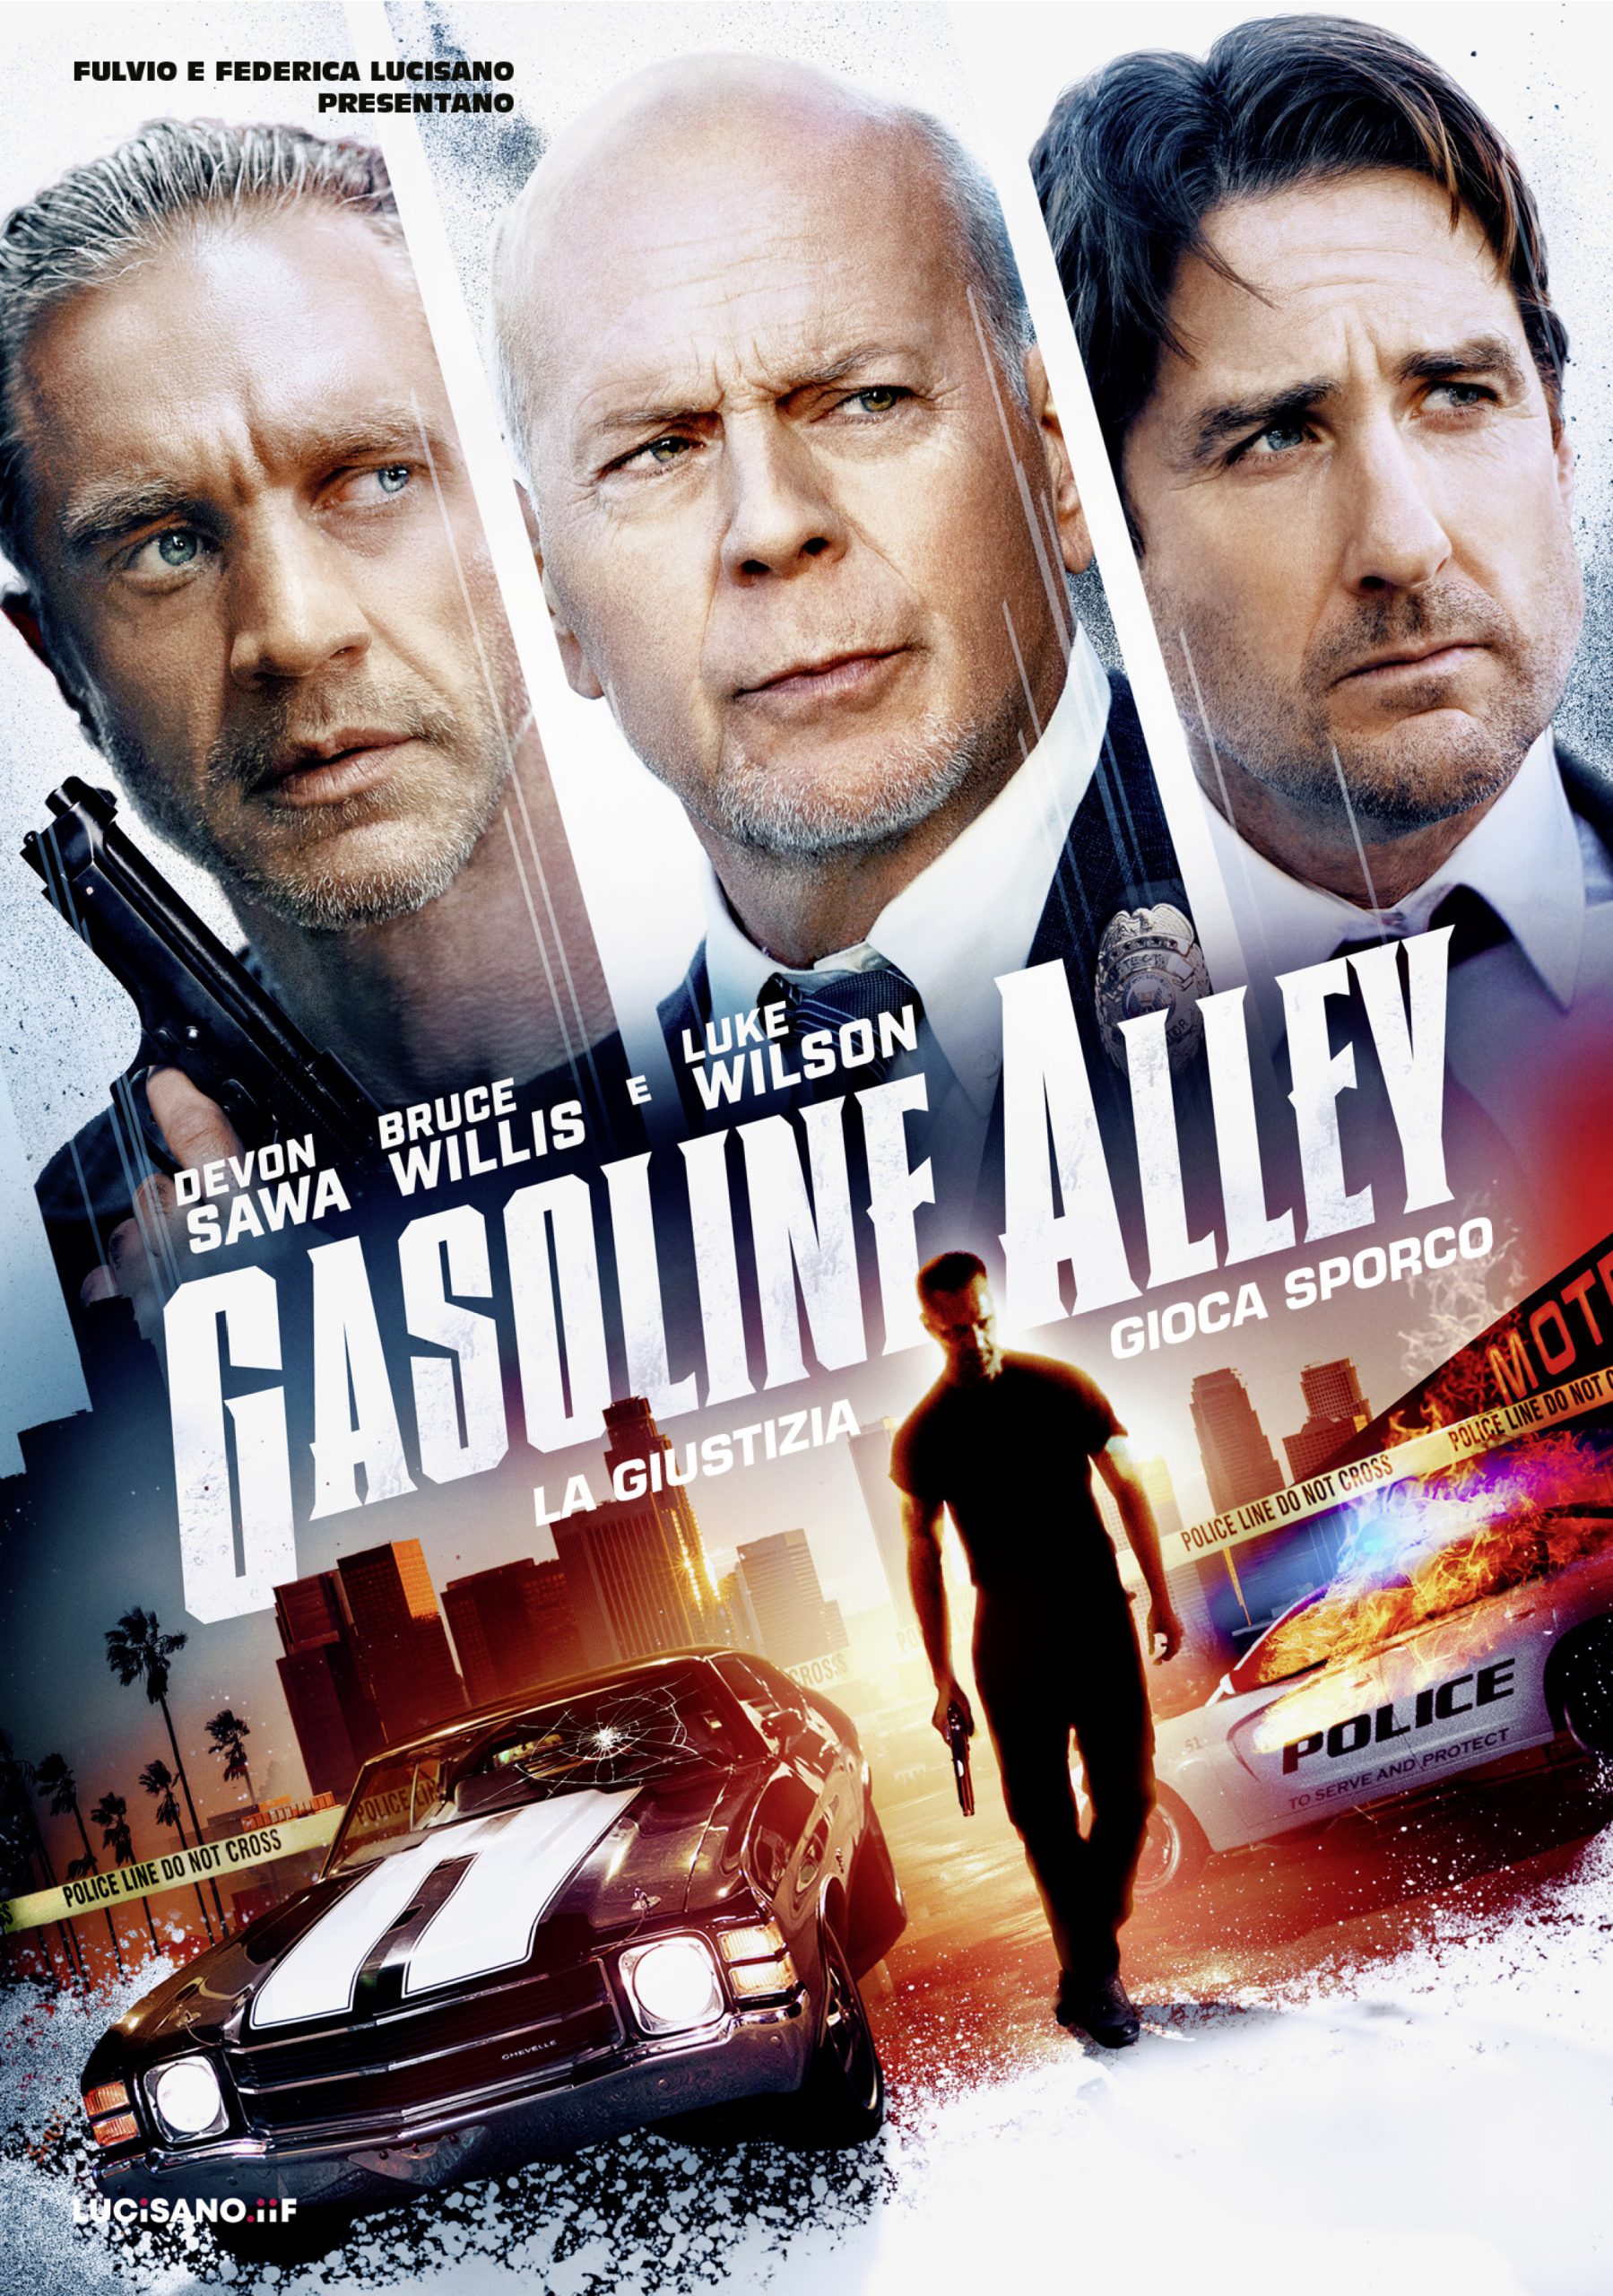 Gasoline Alley [HD] (2022)